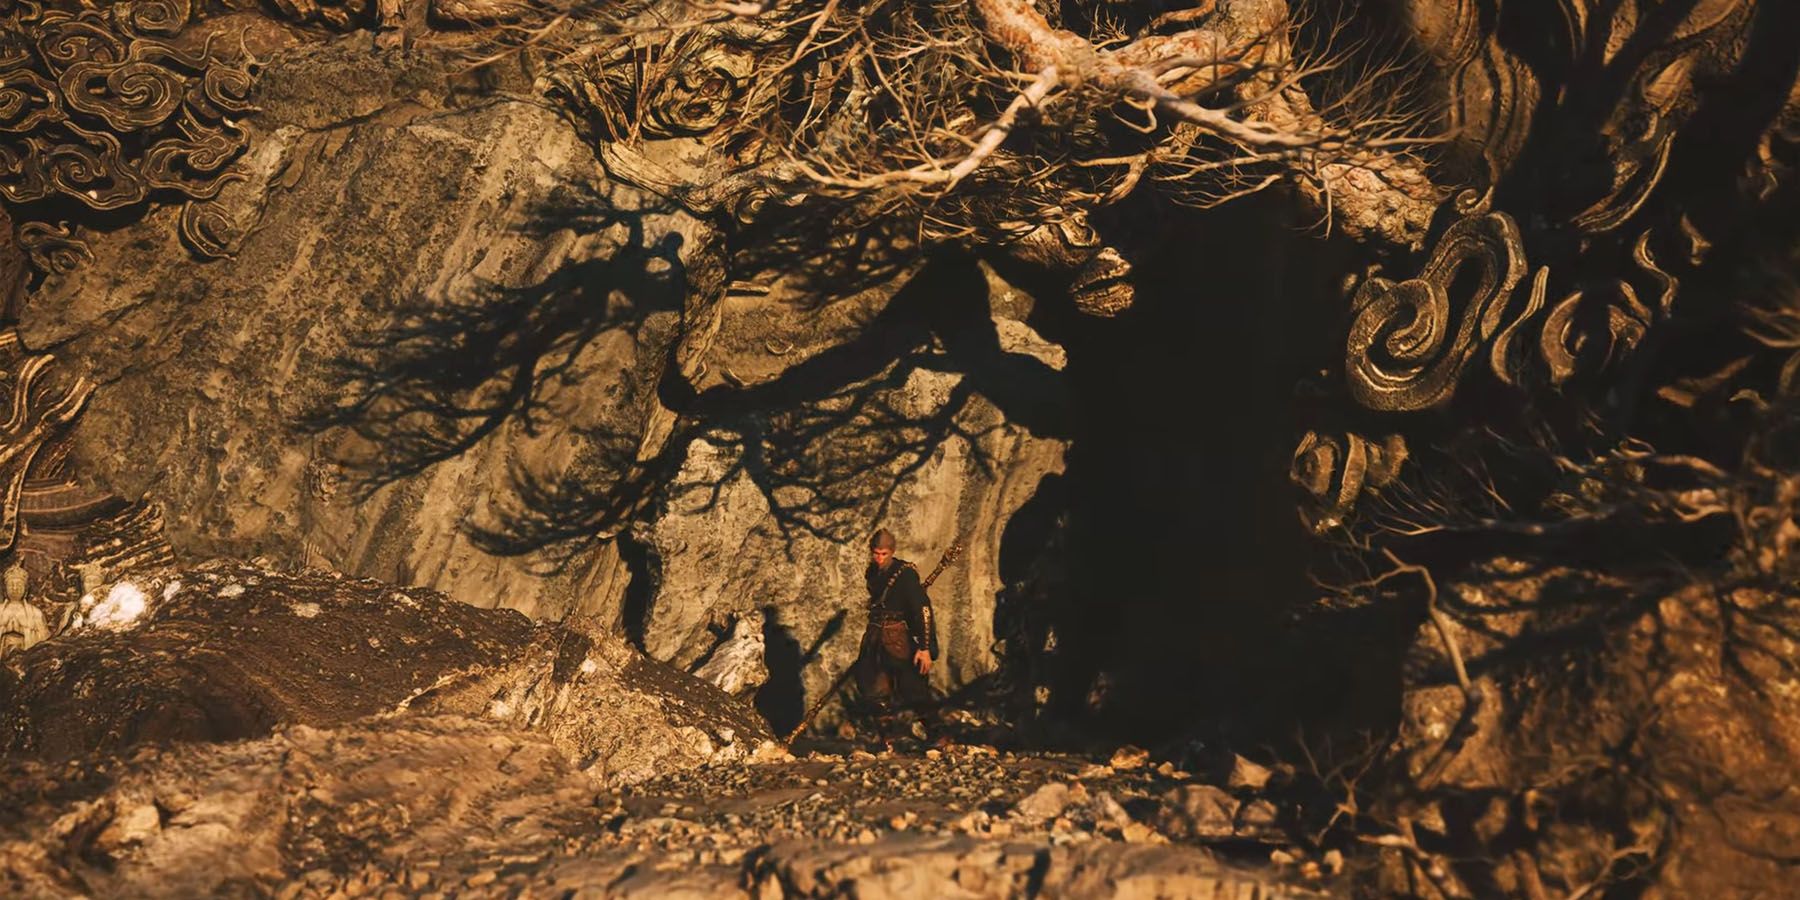 Black Myth Wukong Cave Sunset